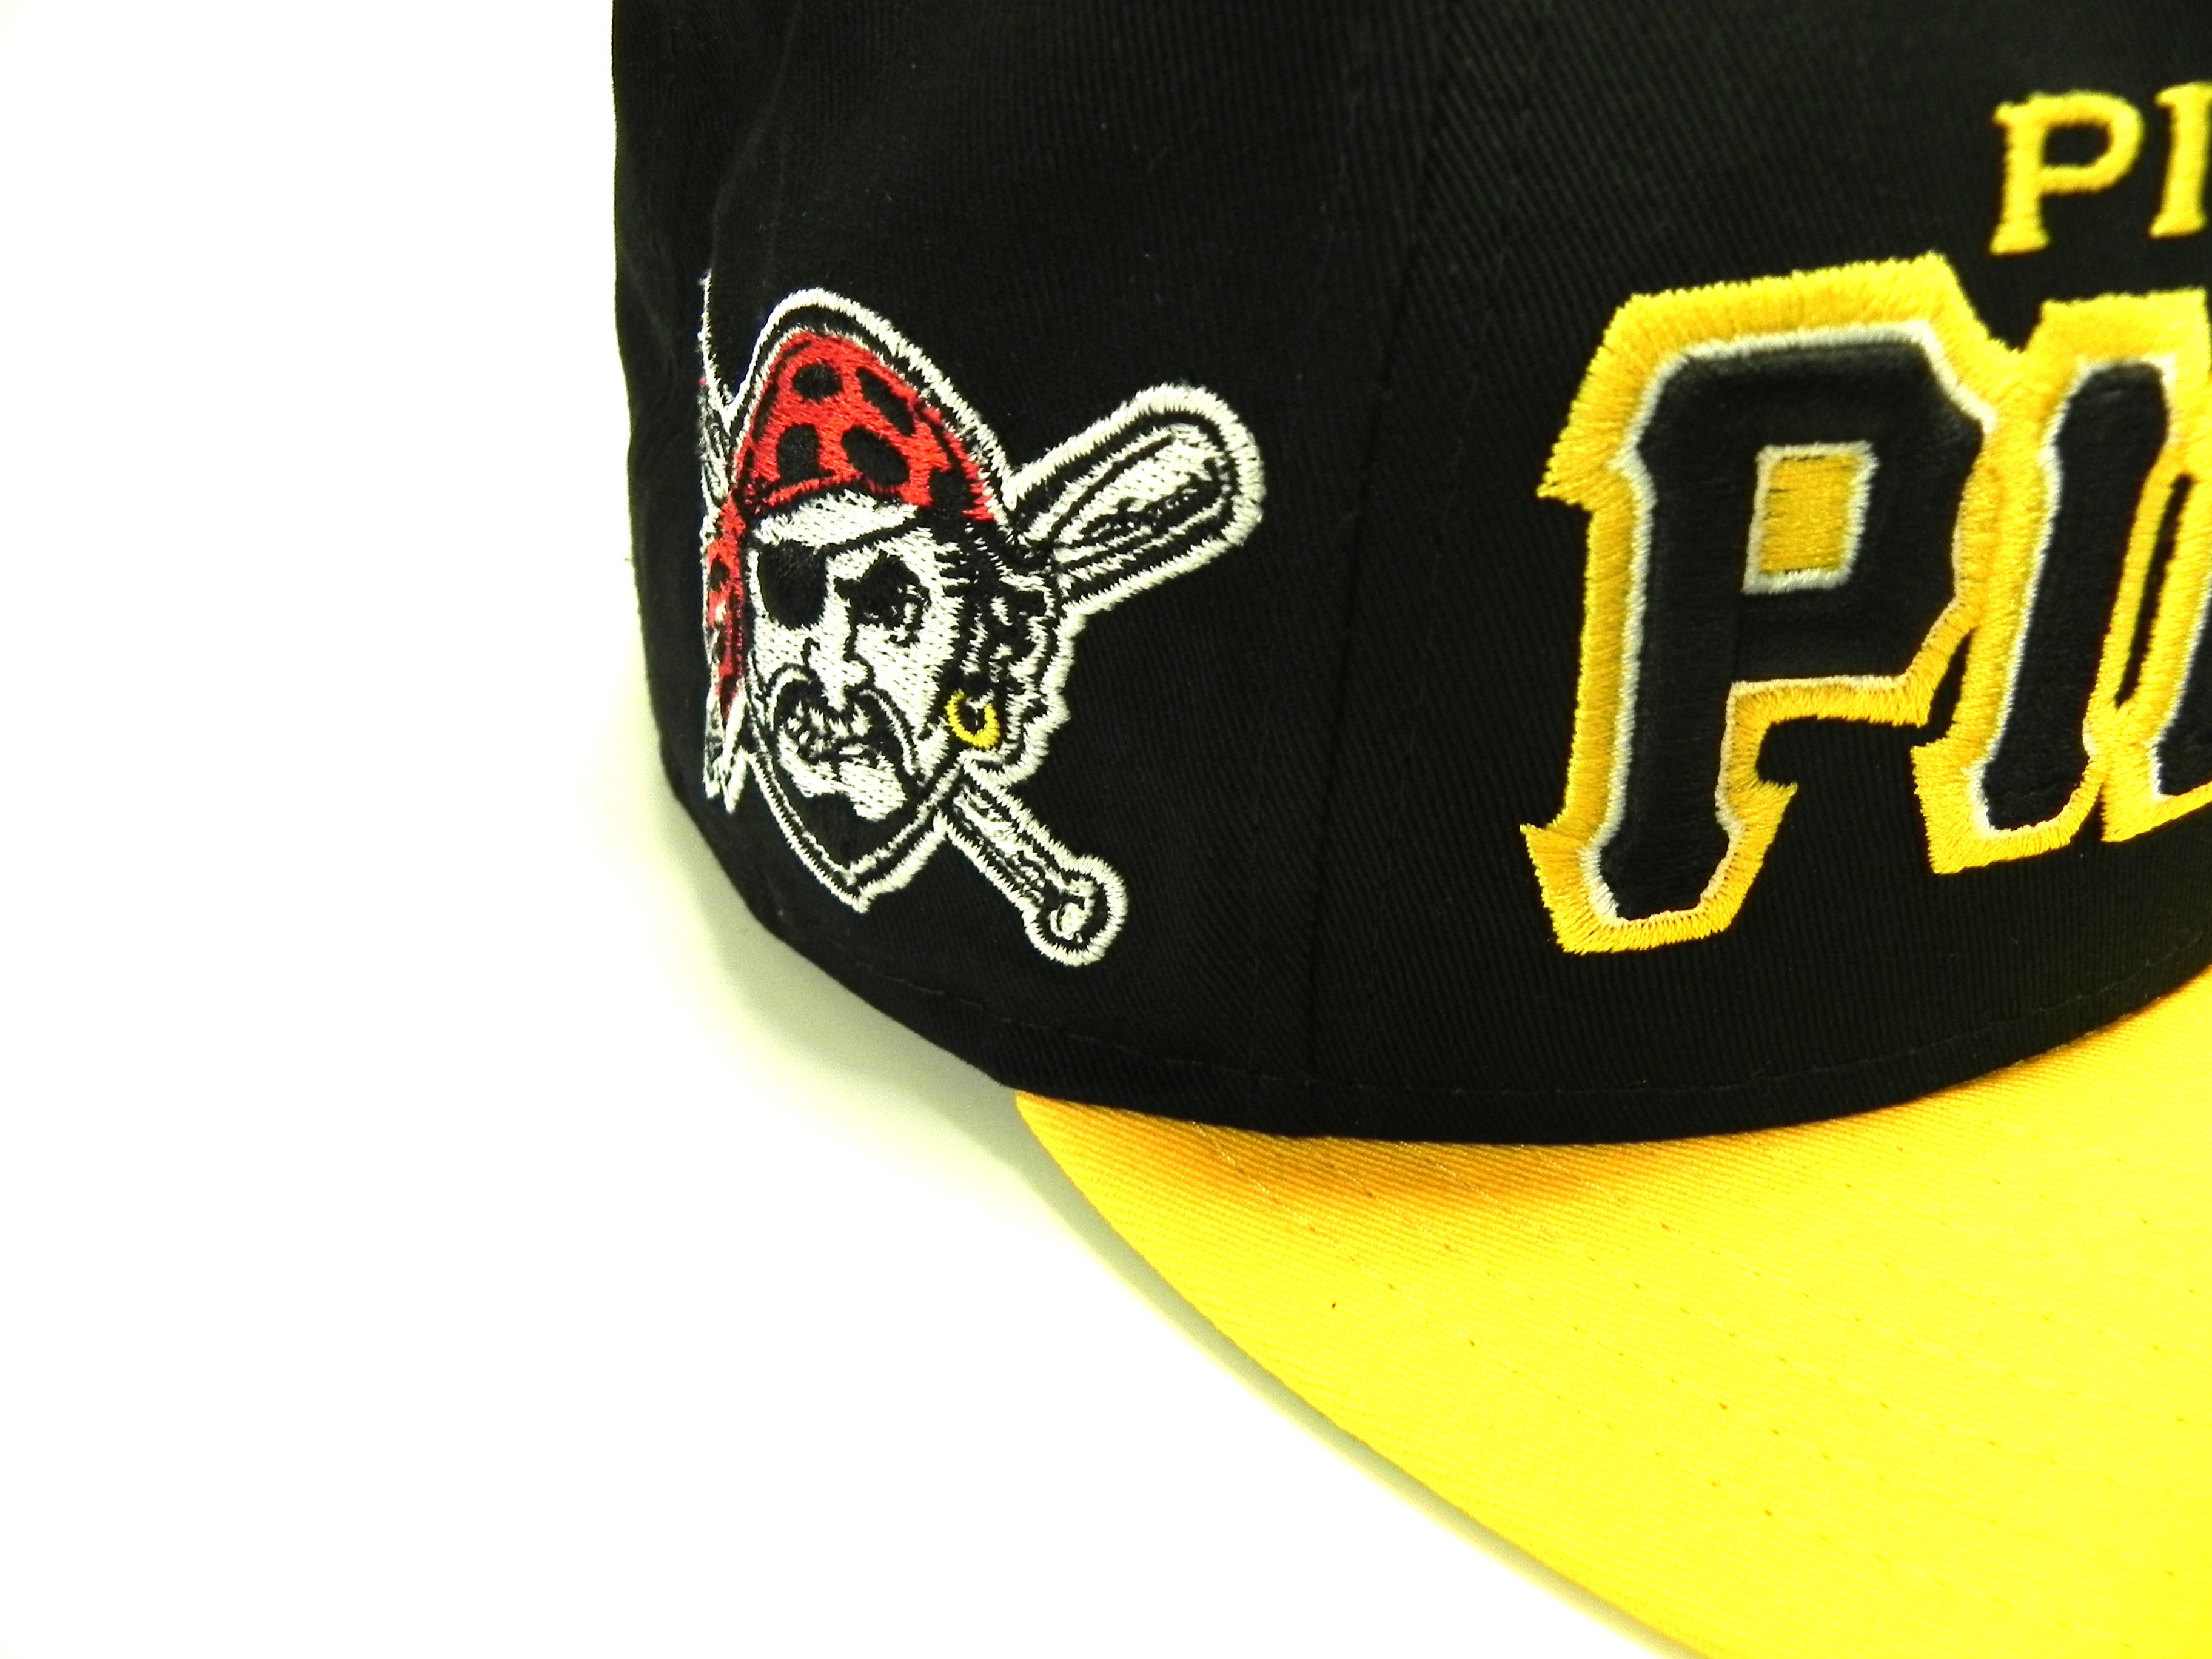 pittsburgh pirates iphone wallpaper,cap,clothing,yellow,baseball cap,headgear